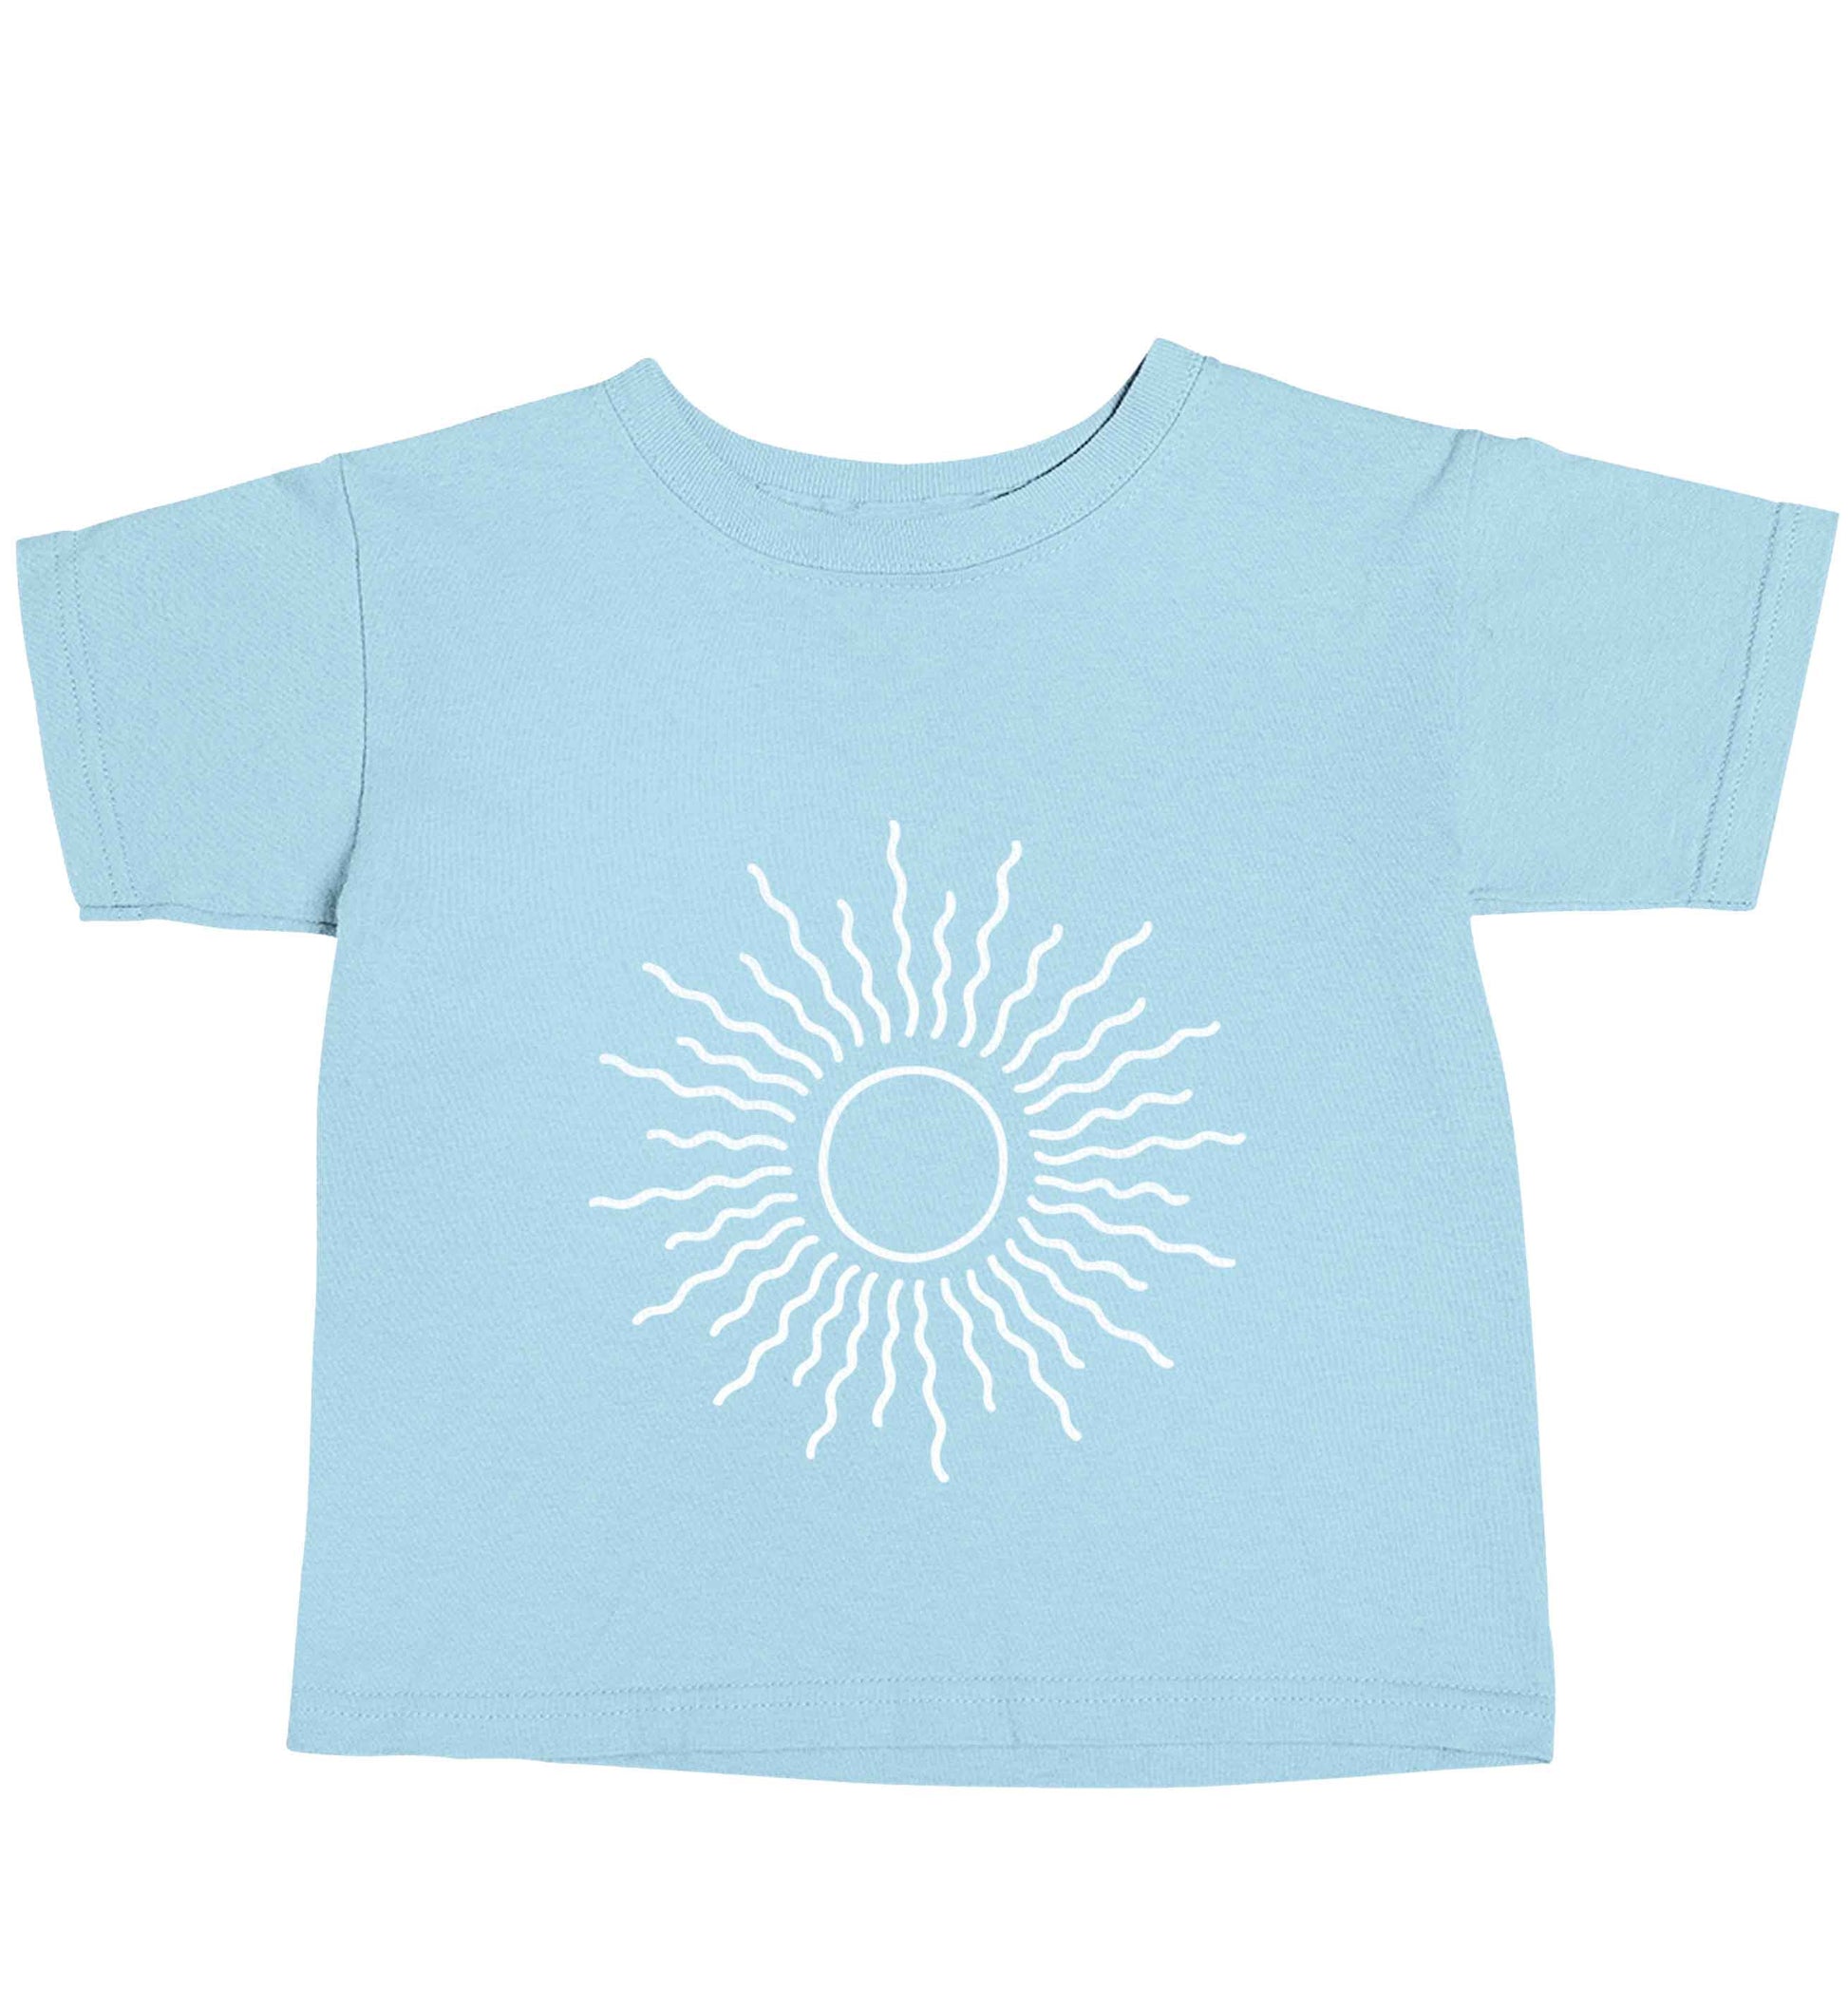 Sun illustration light blue baby toddler Tshirt 2 Years